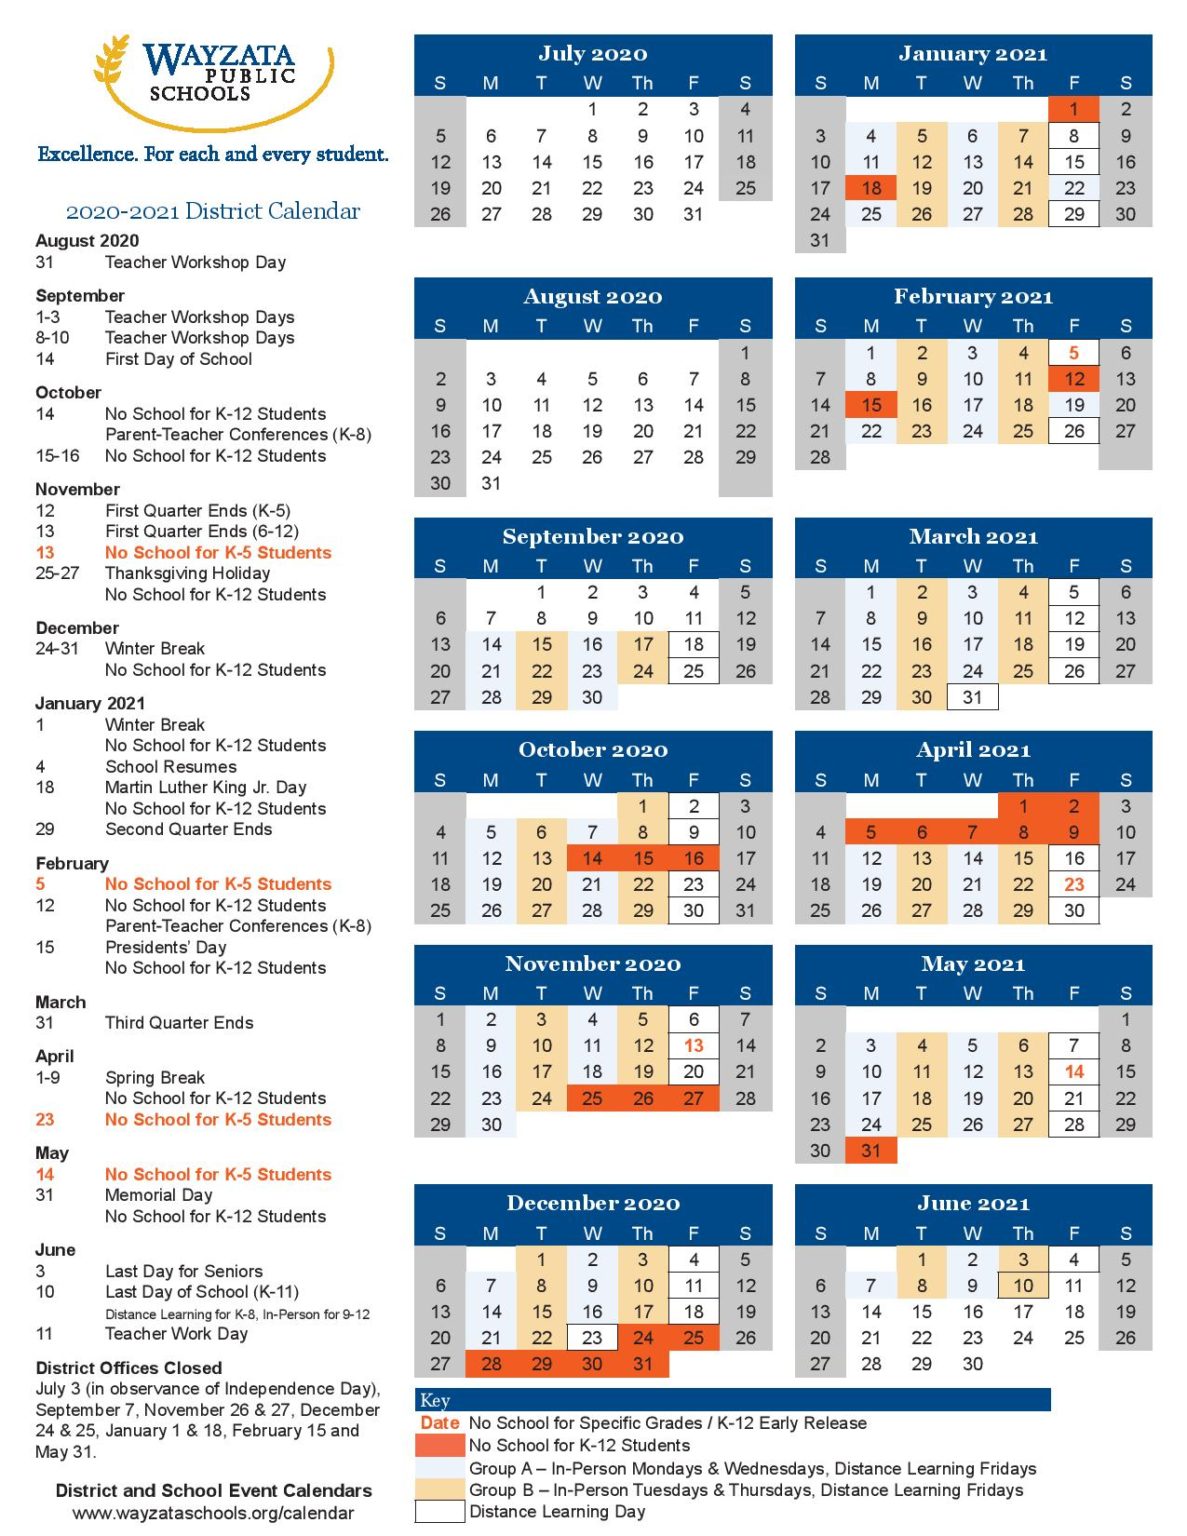 Wayzata Public Schools Calendar 20202021 in PDF